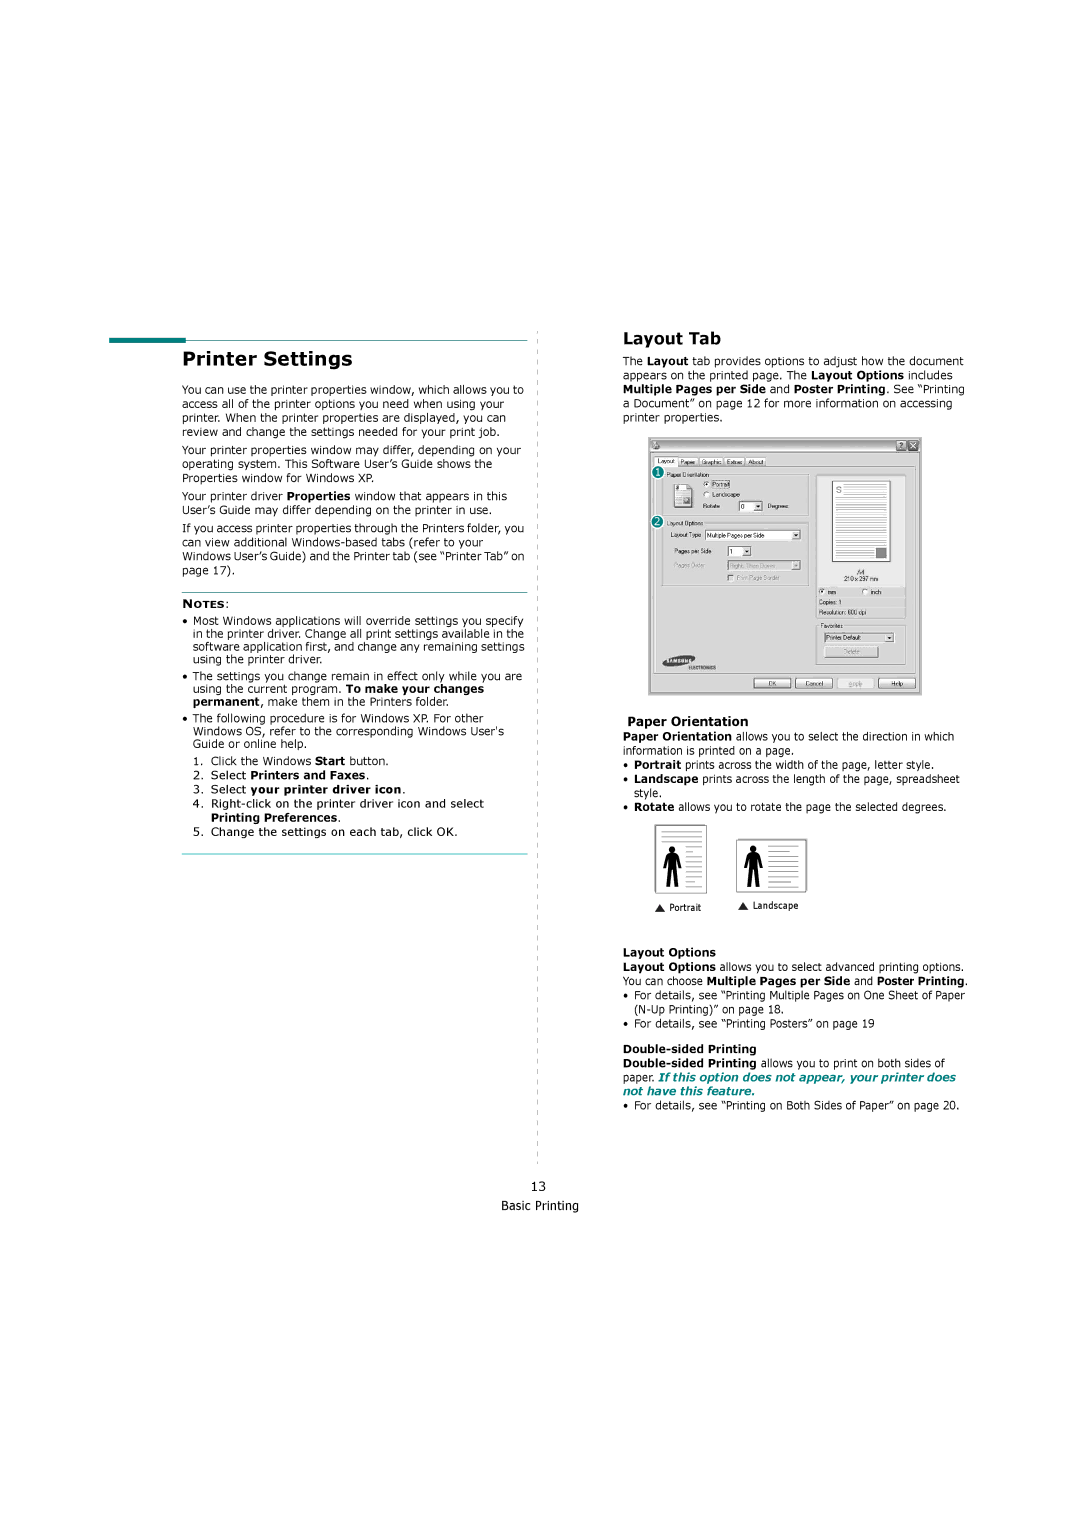 Sharp ML-4550 manual Printer Settings, Layout Tab, Paper Orientation 